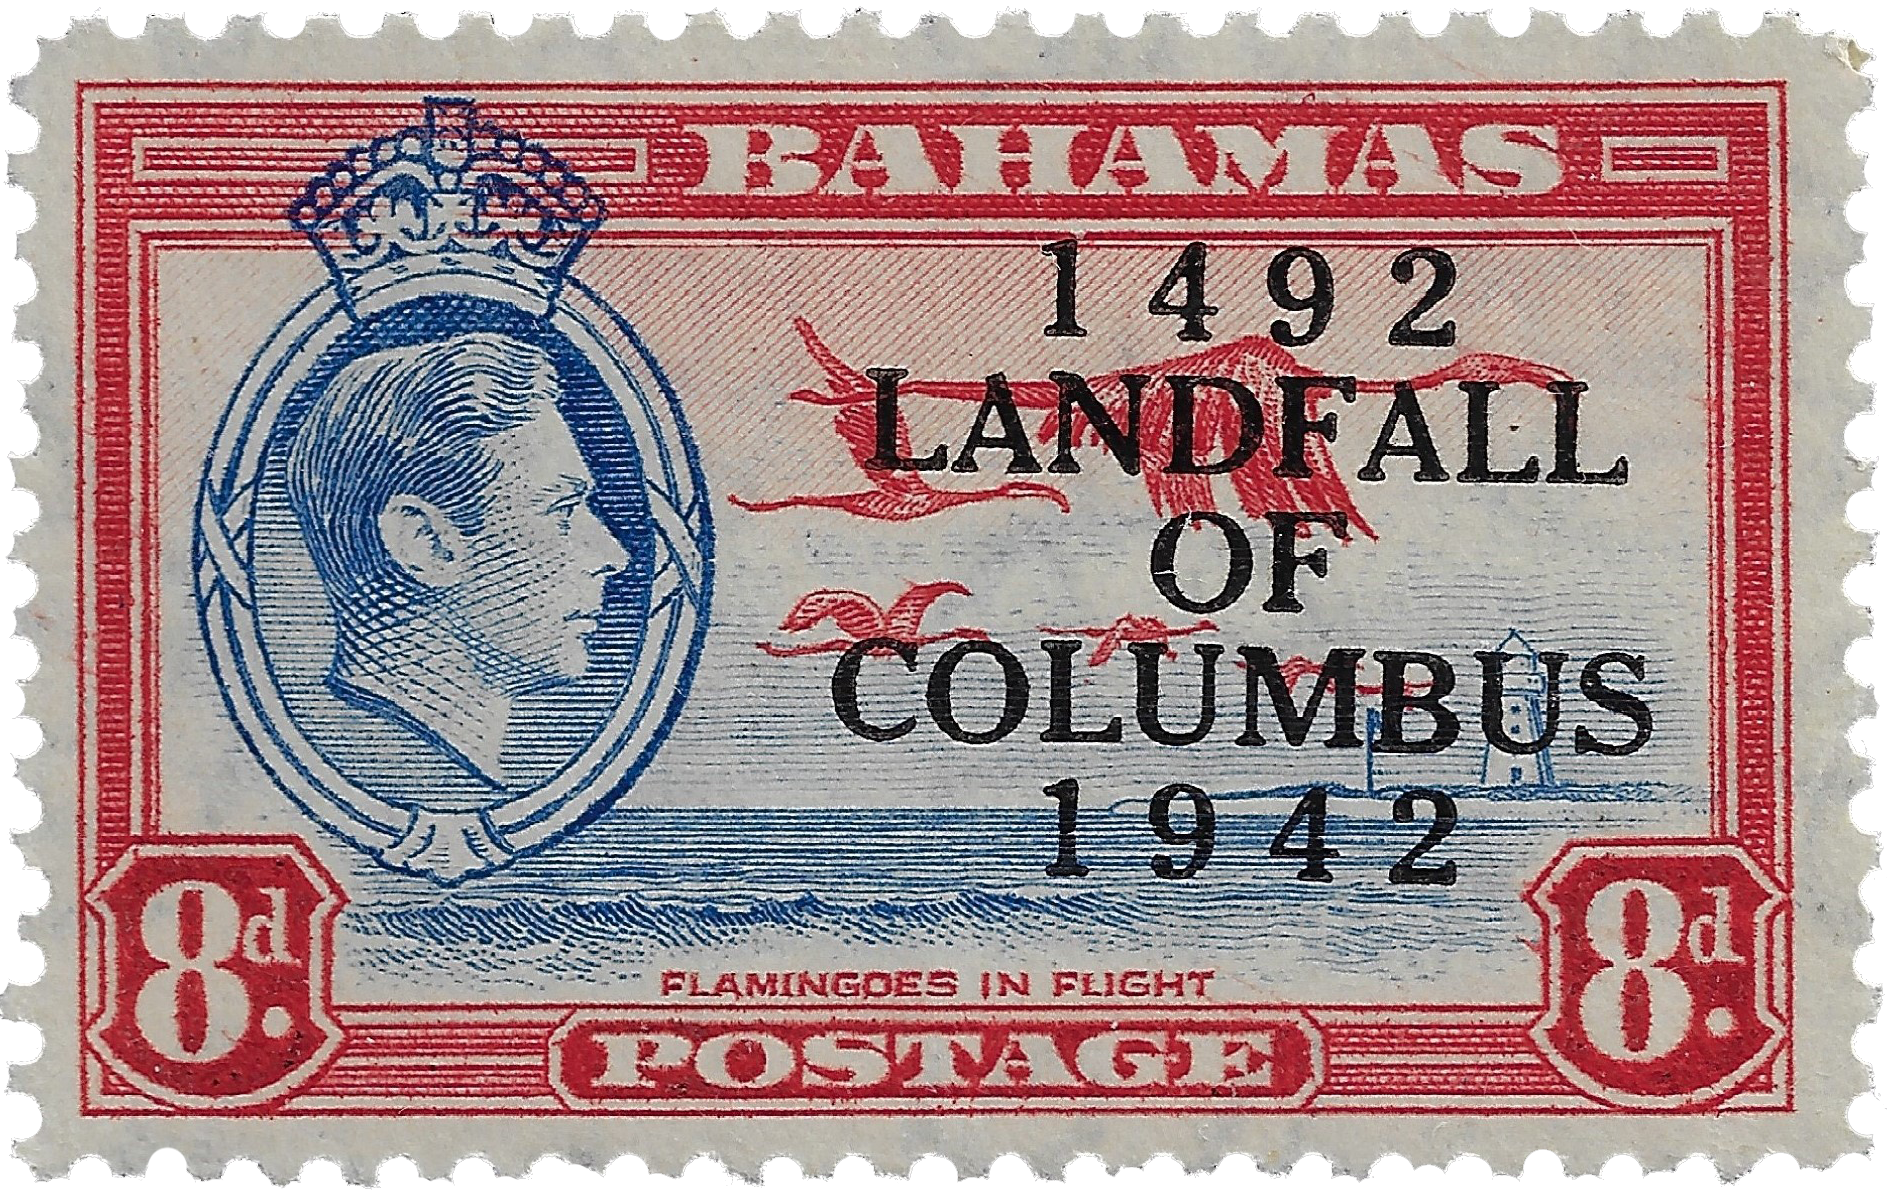 8d 1942, Eight Dollars, Flamingoes in Flight, 1492 Landfall of Columbus